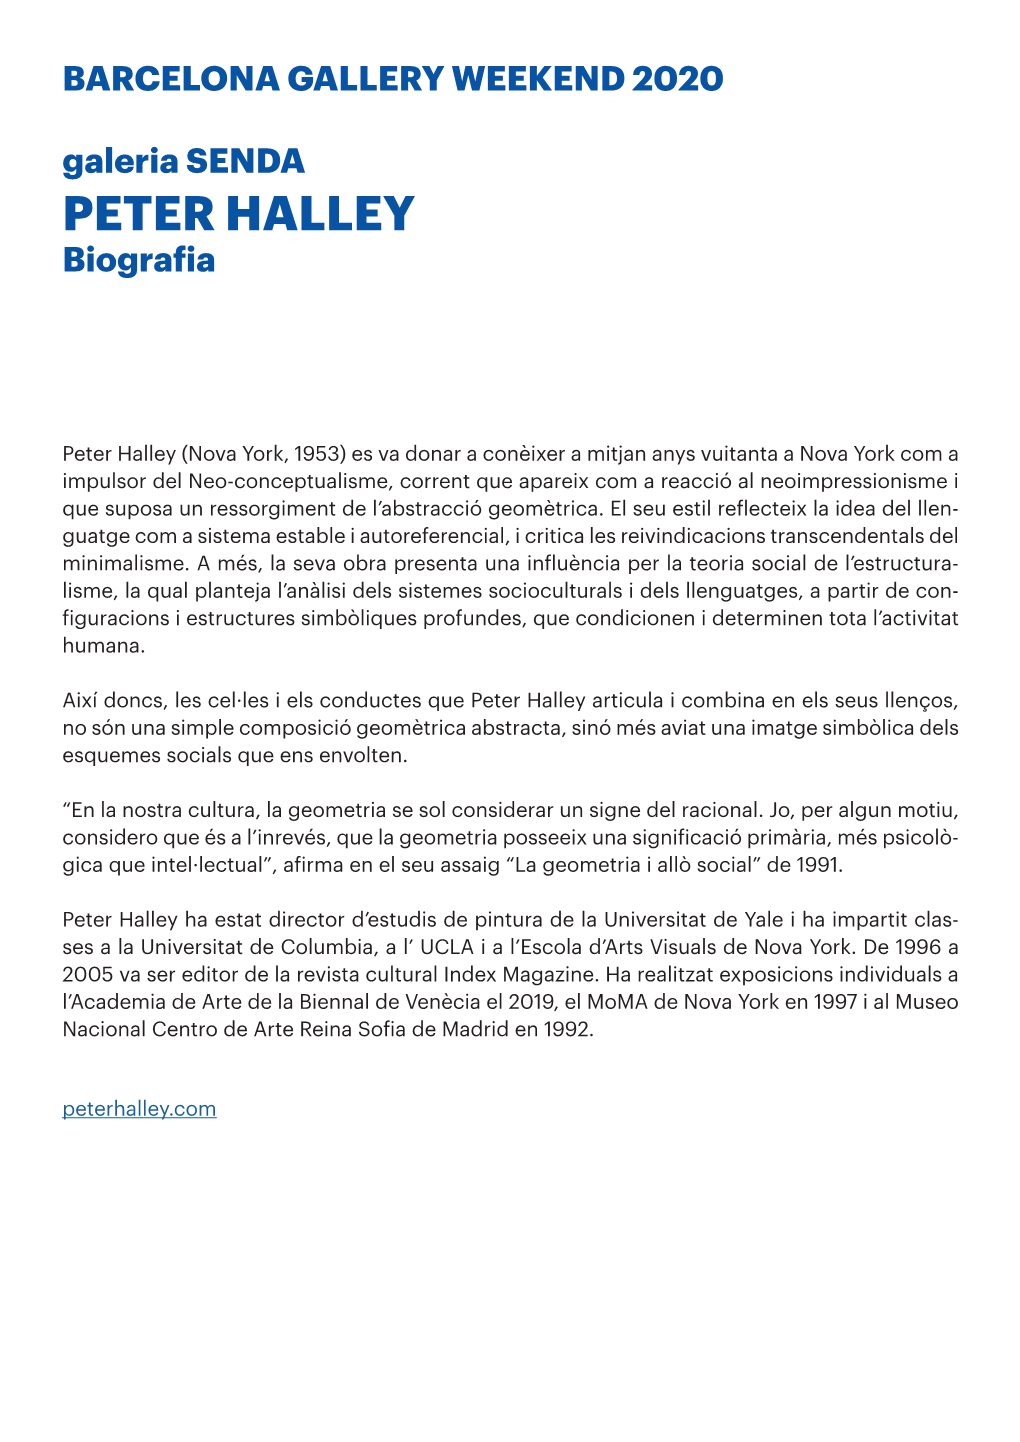 PETER HALLEY Biografia